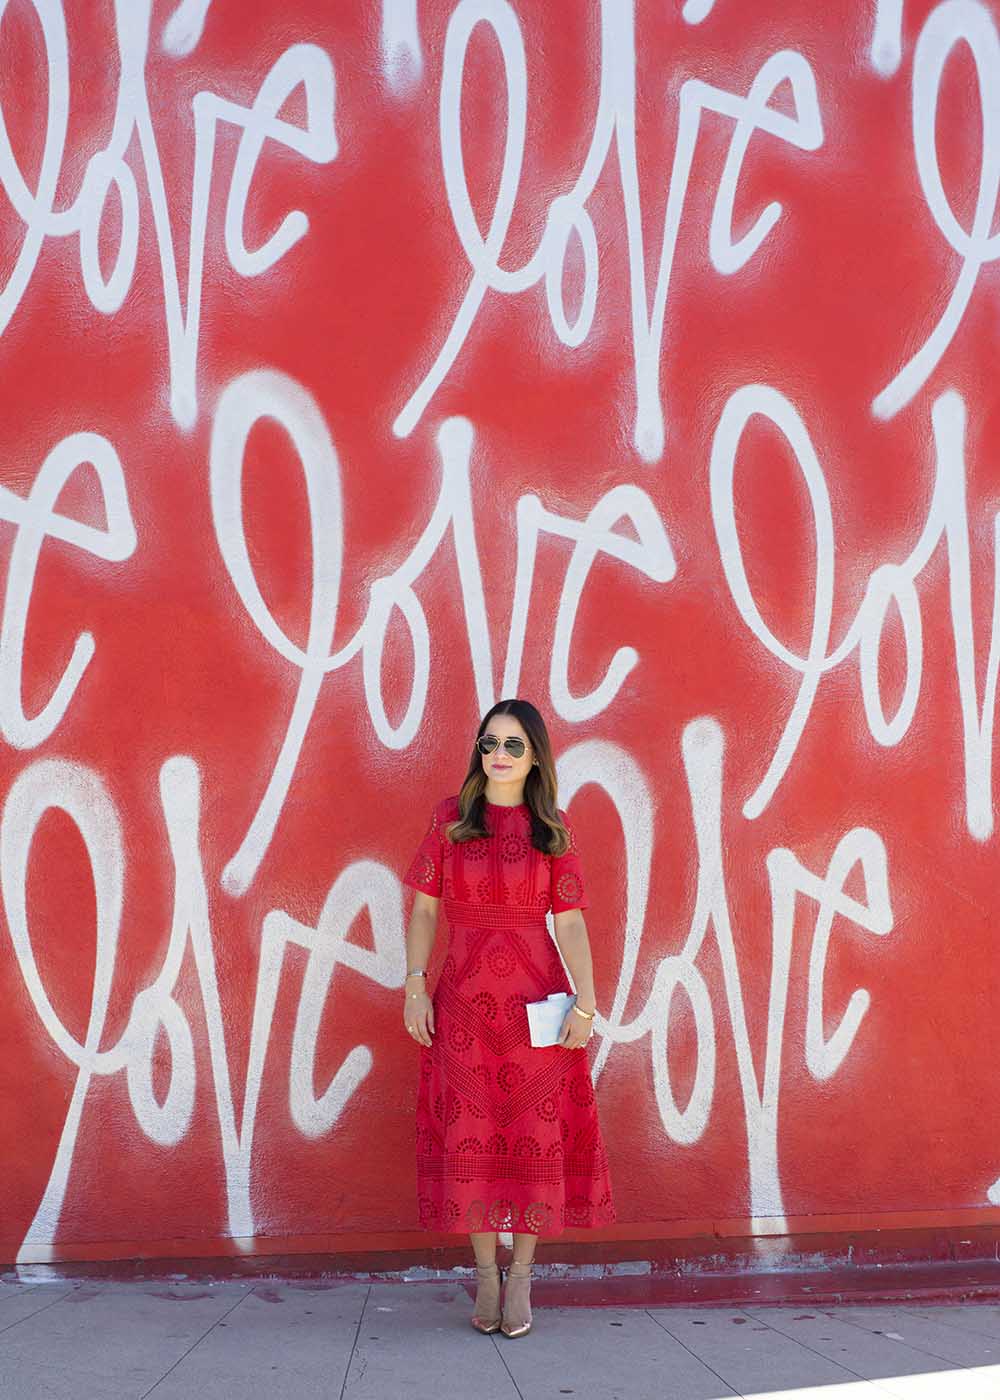 Red Dress Love Wall